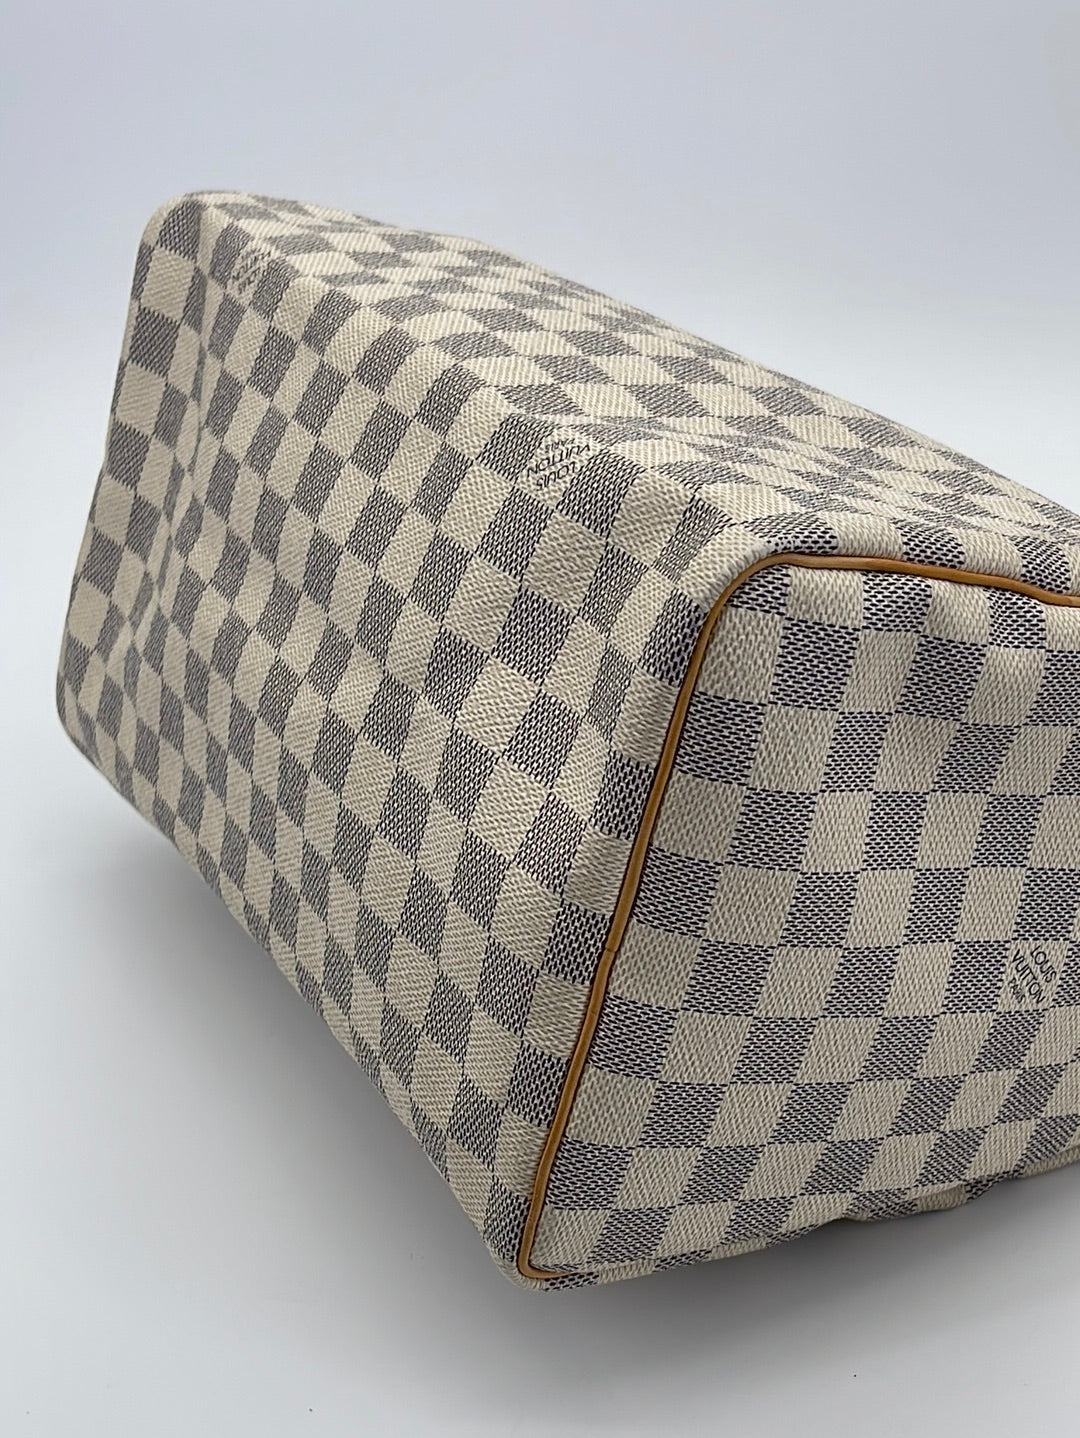 LOUIS VUITTON Damier Azur Canvas Speedy 30 Bag - The Luxury Pop